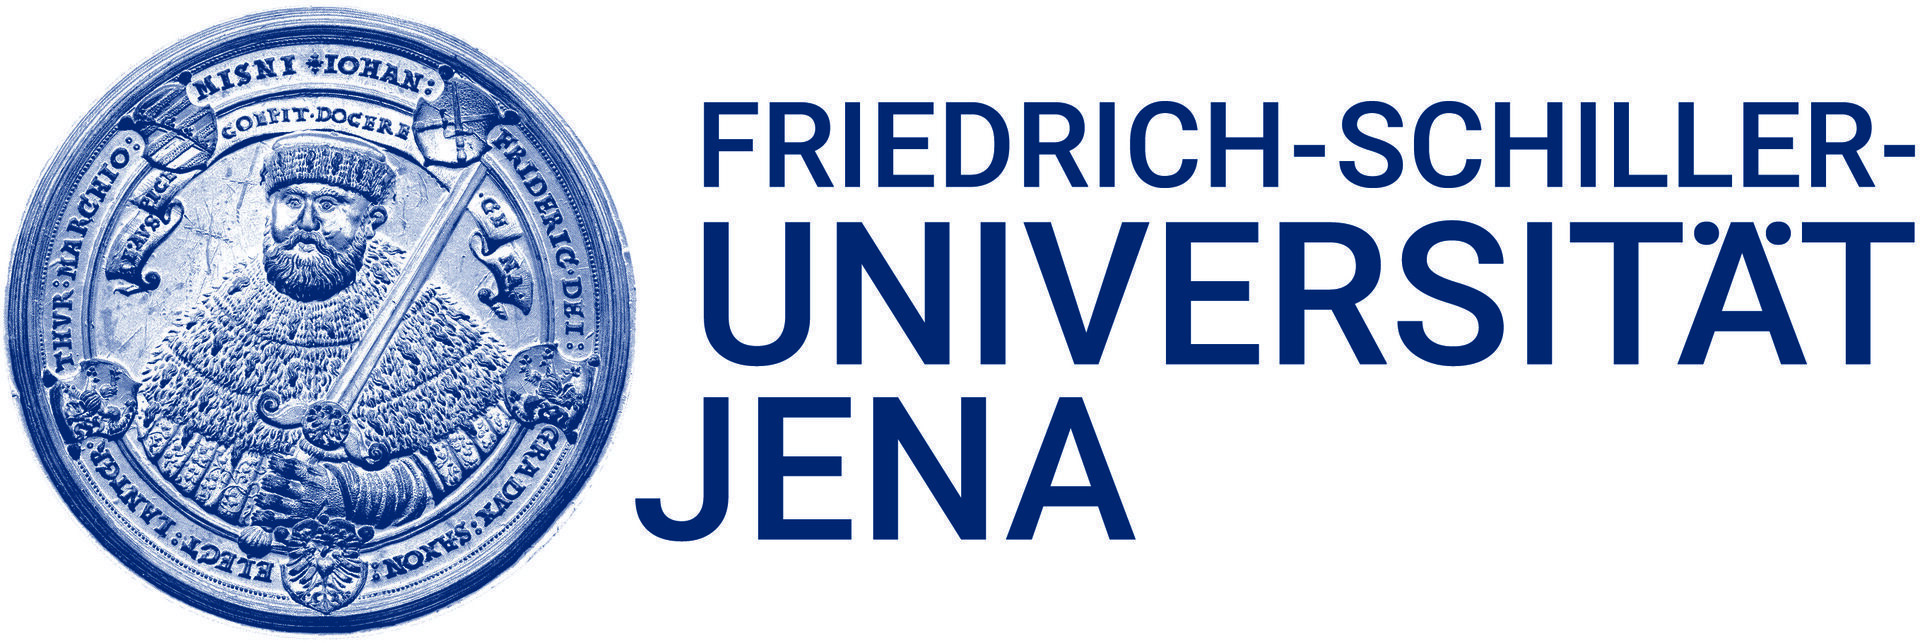 Friedrich Schiller University Jena logo